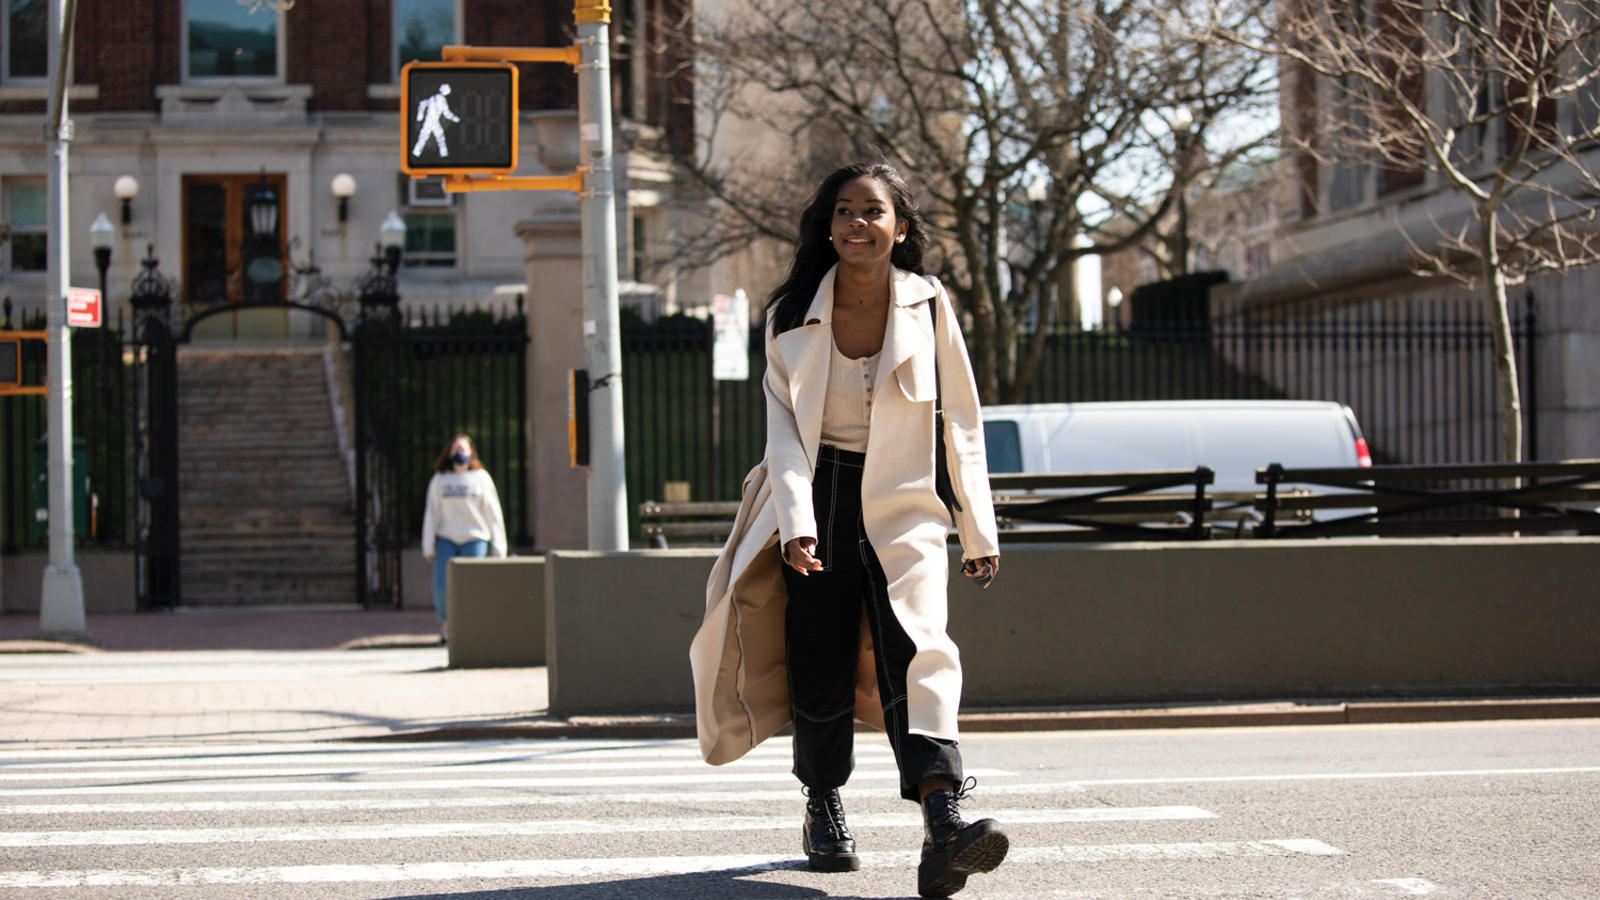 Student Audrey McNeal '24 walks across a New York City street